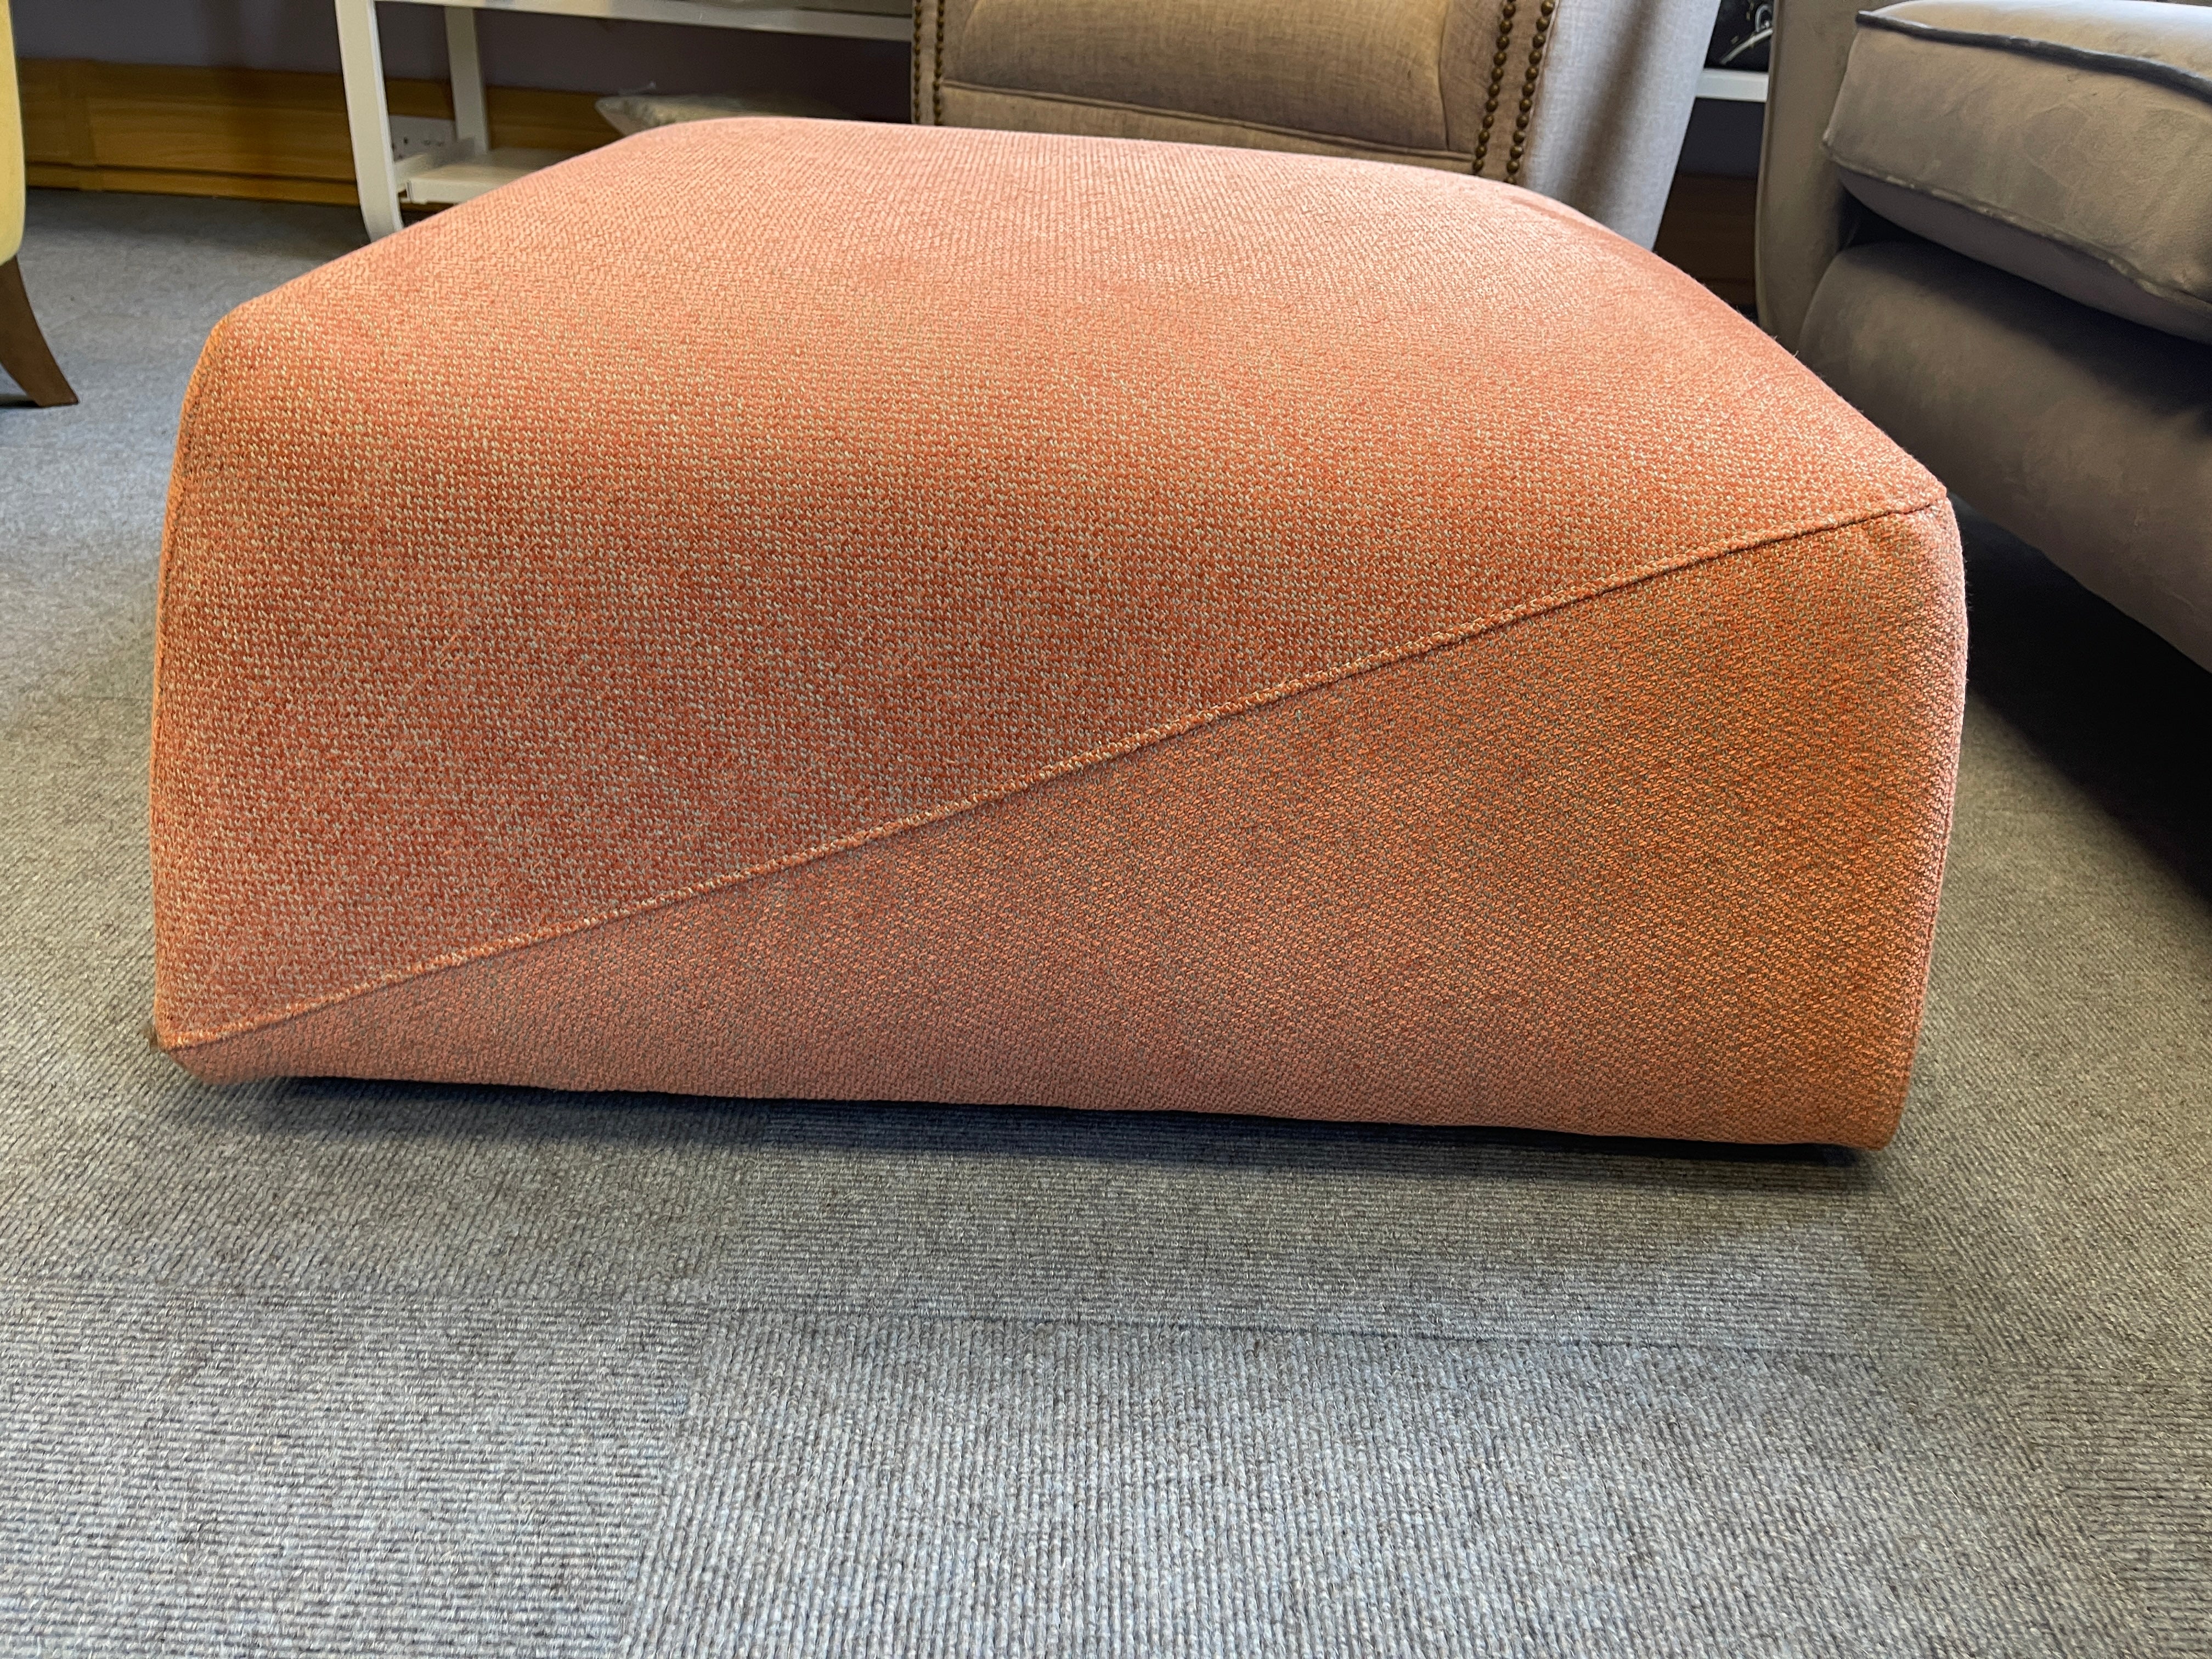 WHITE LABEL VERSATILE high square shape footstool in peach orange weave